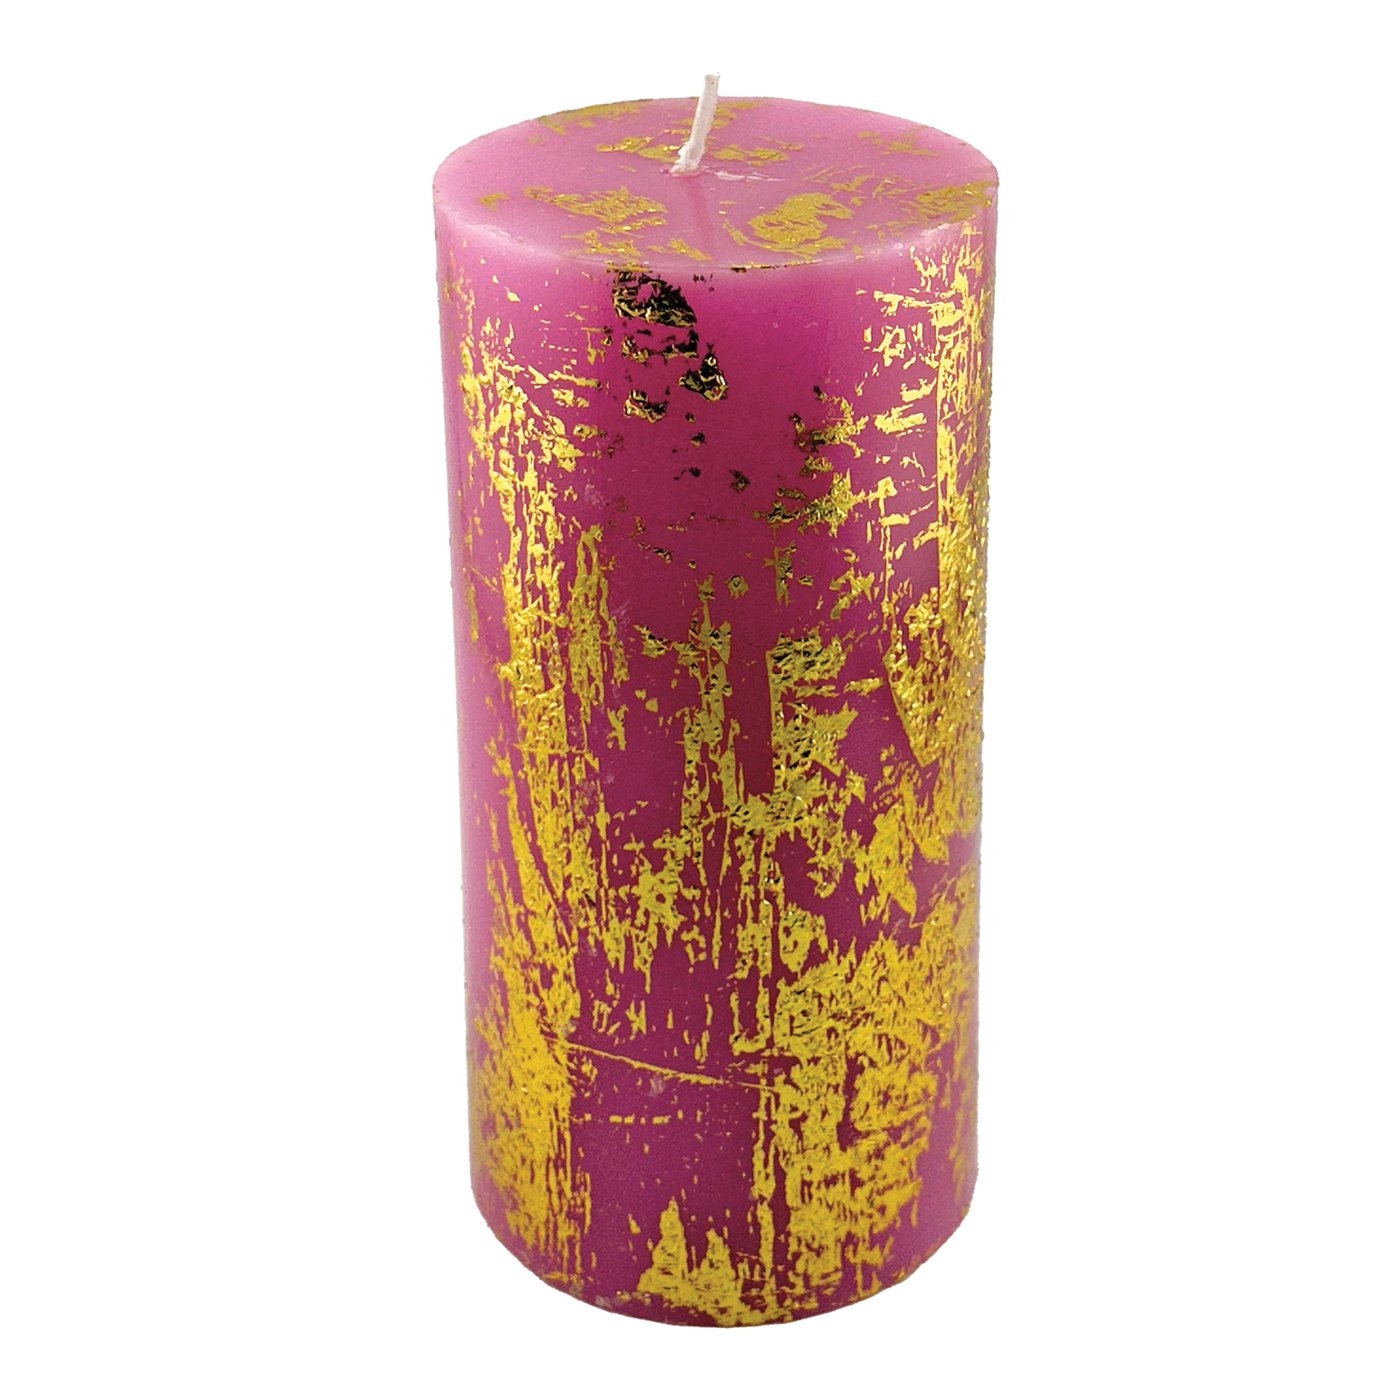 Rainbow Pillar Candle - Lavender